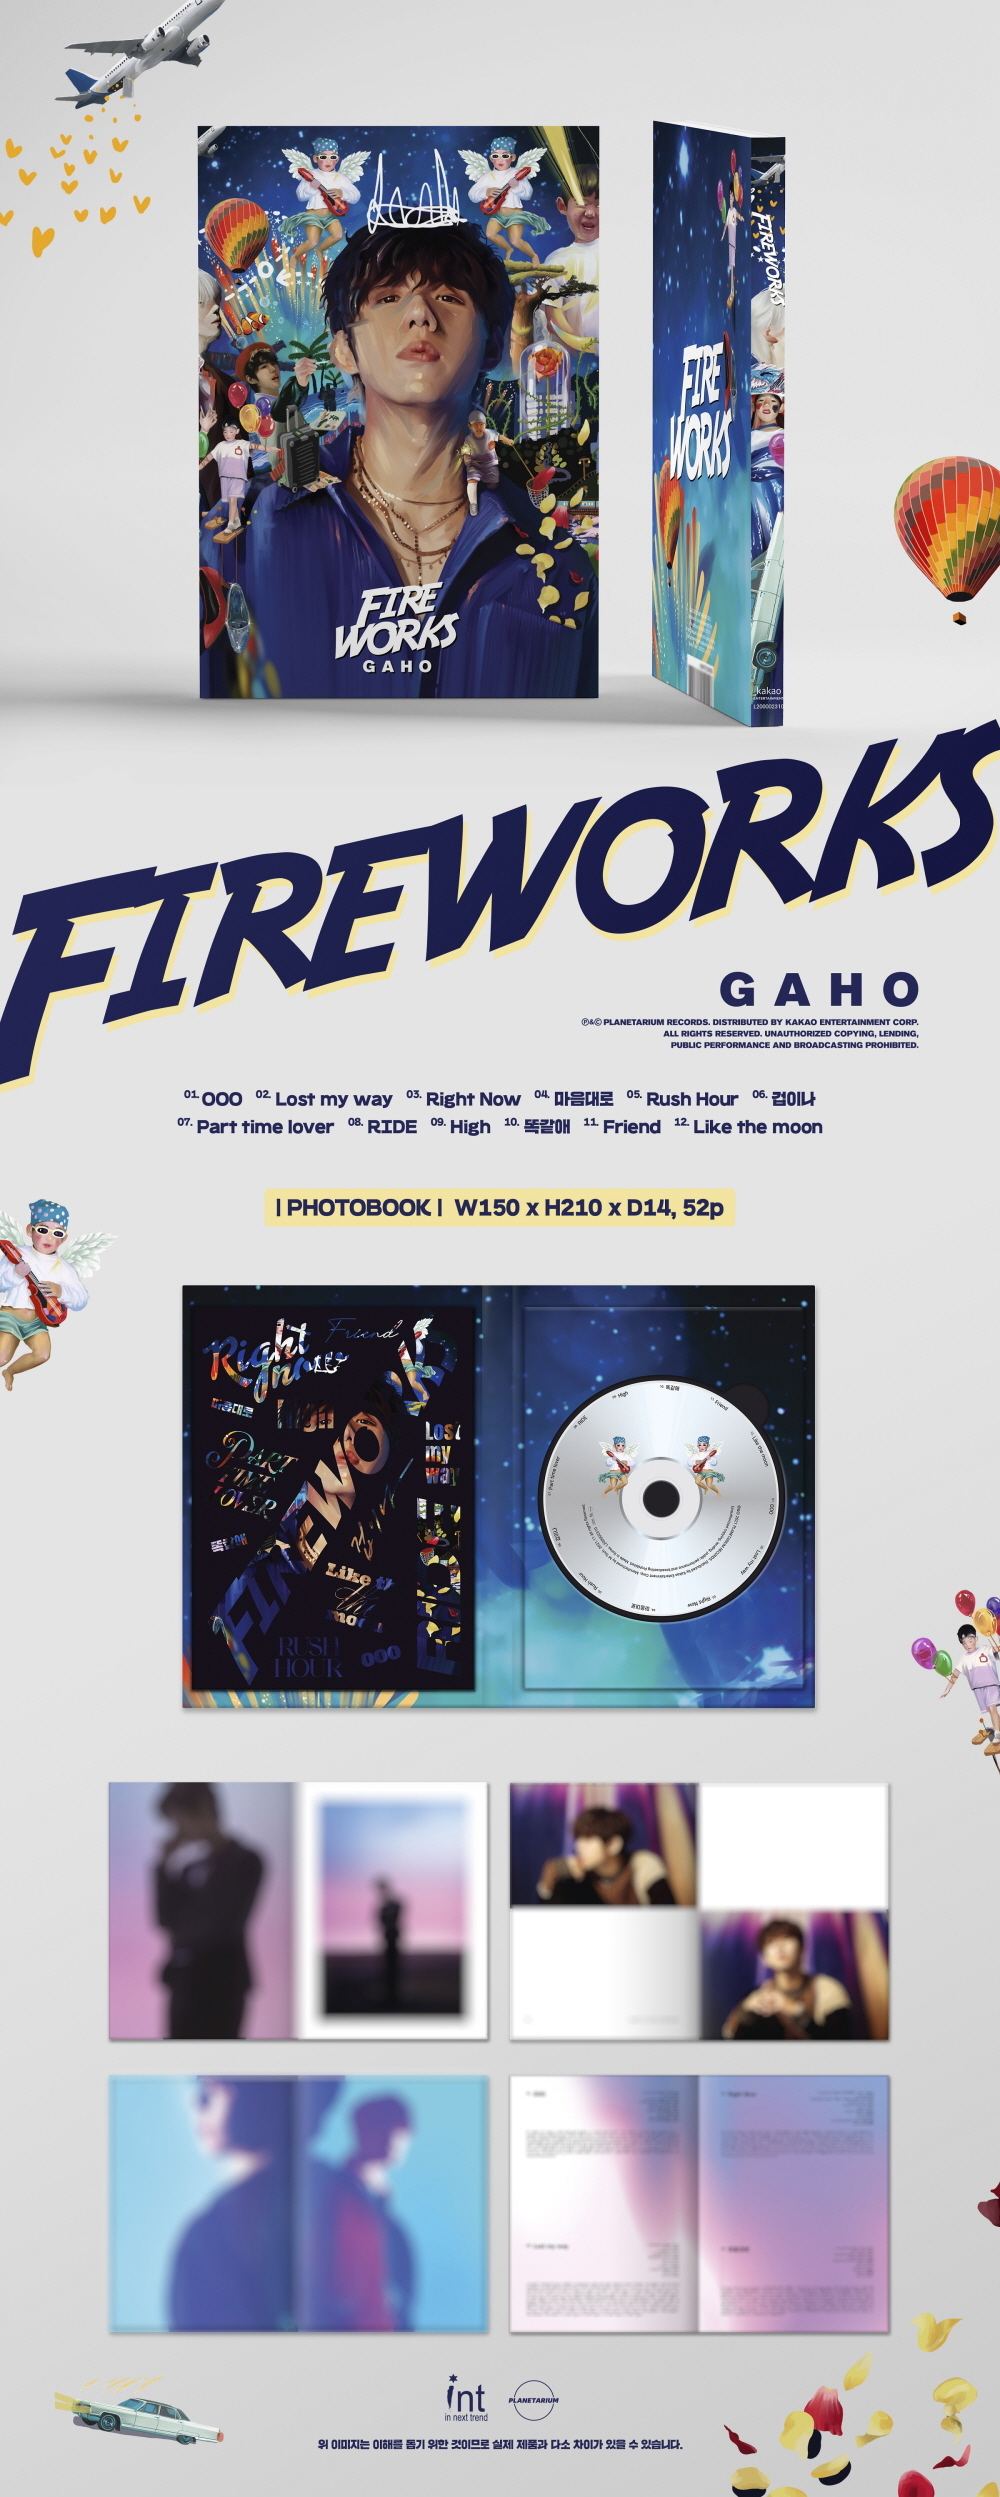 Gaho - The 1ST ALBUM [Fireworks] GAHO GAHOAlbum Fireworks. album GAHOcd GAHOphotocard GAHOphotobook GAHOposter